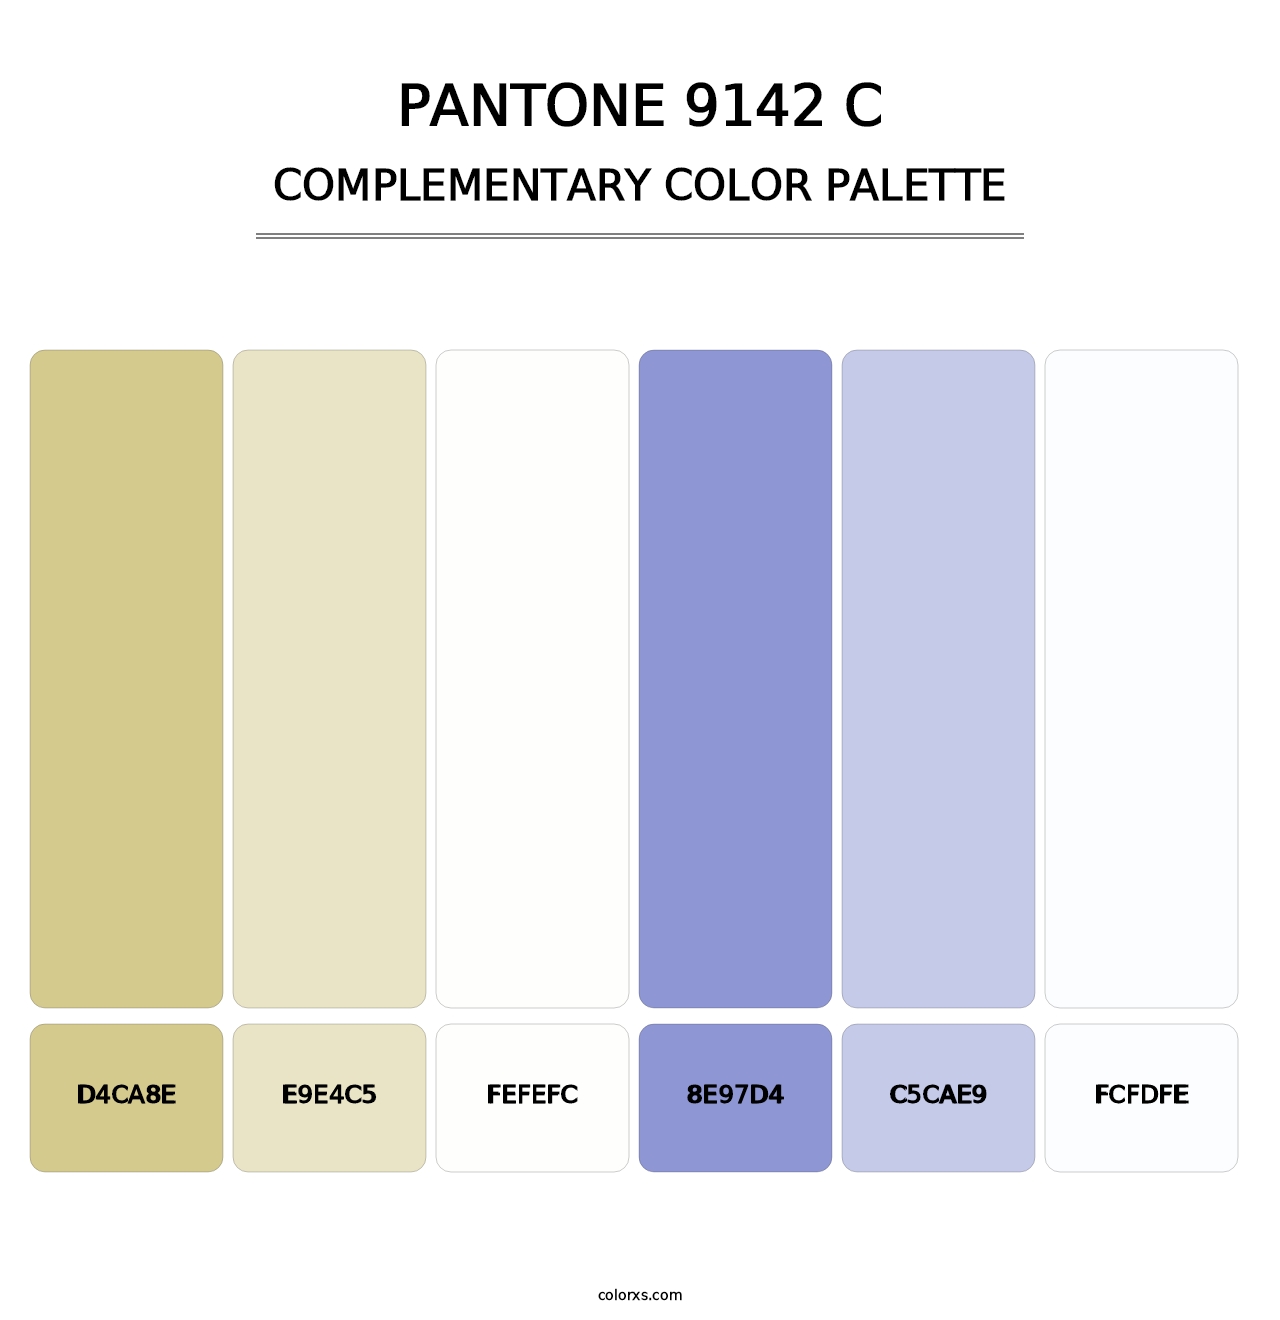 PANTONE 9142 C - Complementary Color Palette